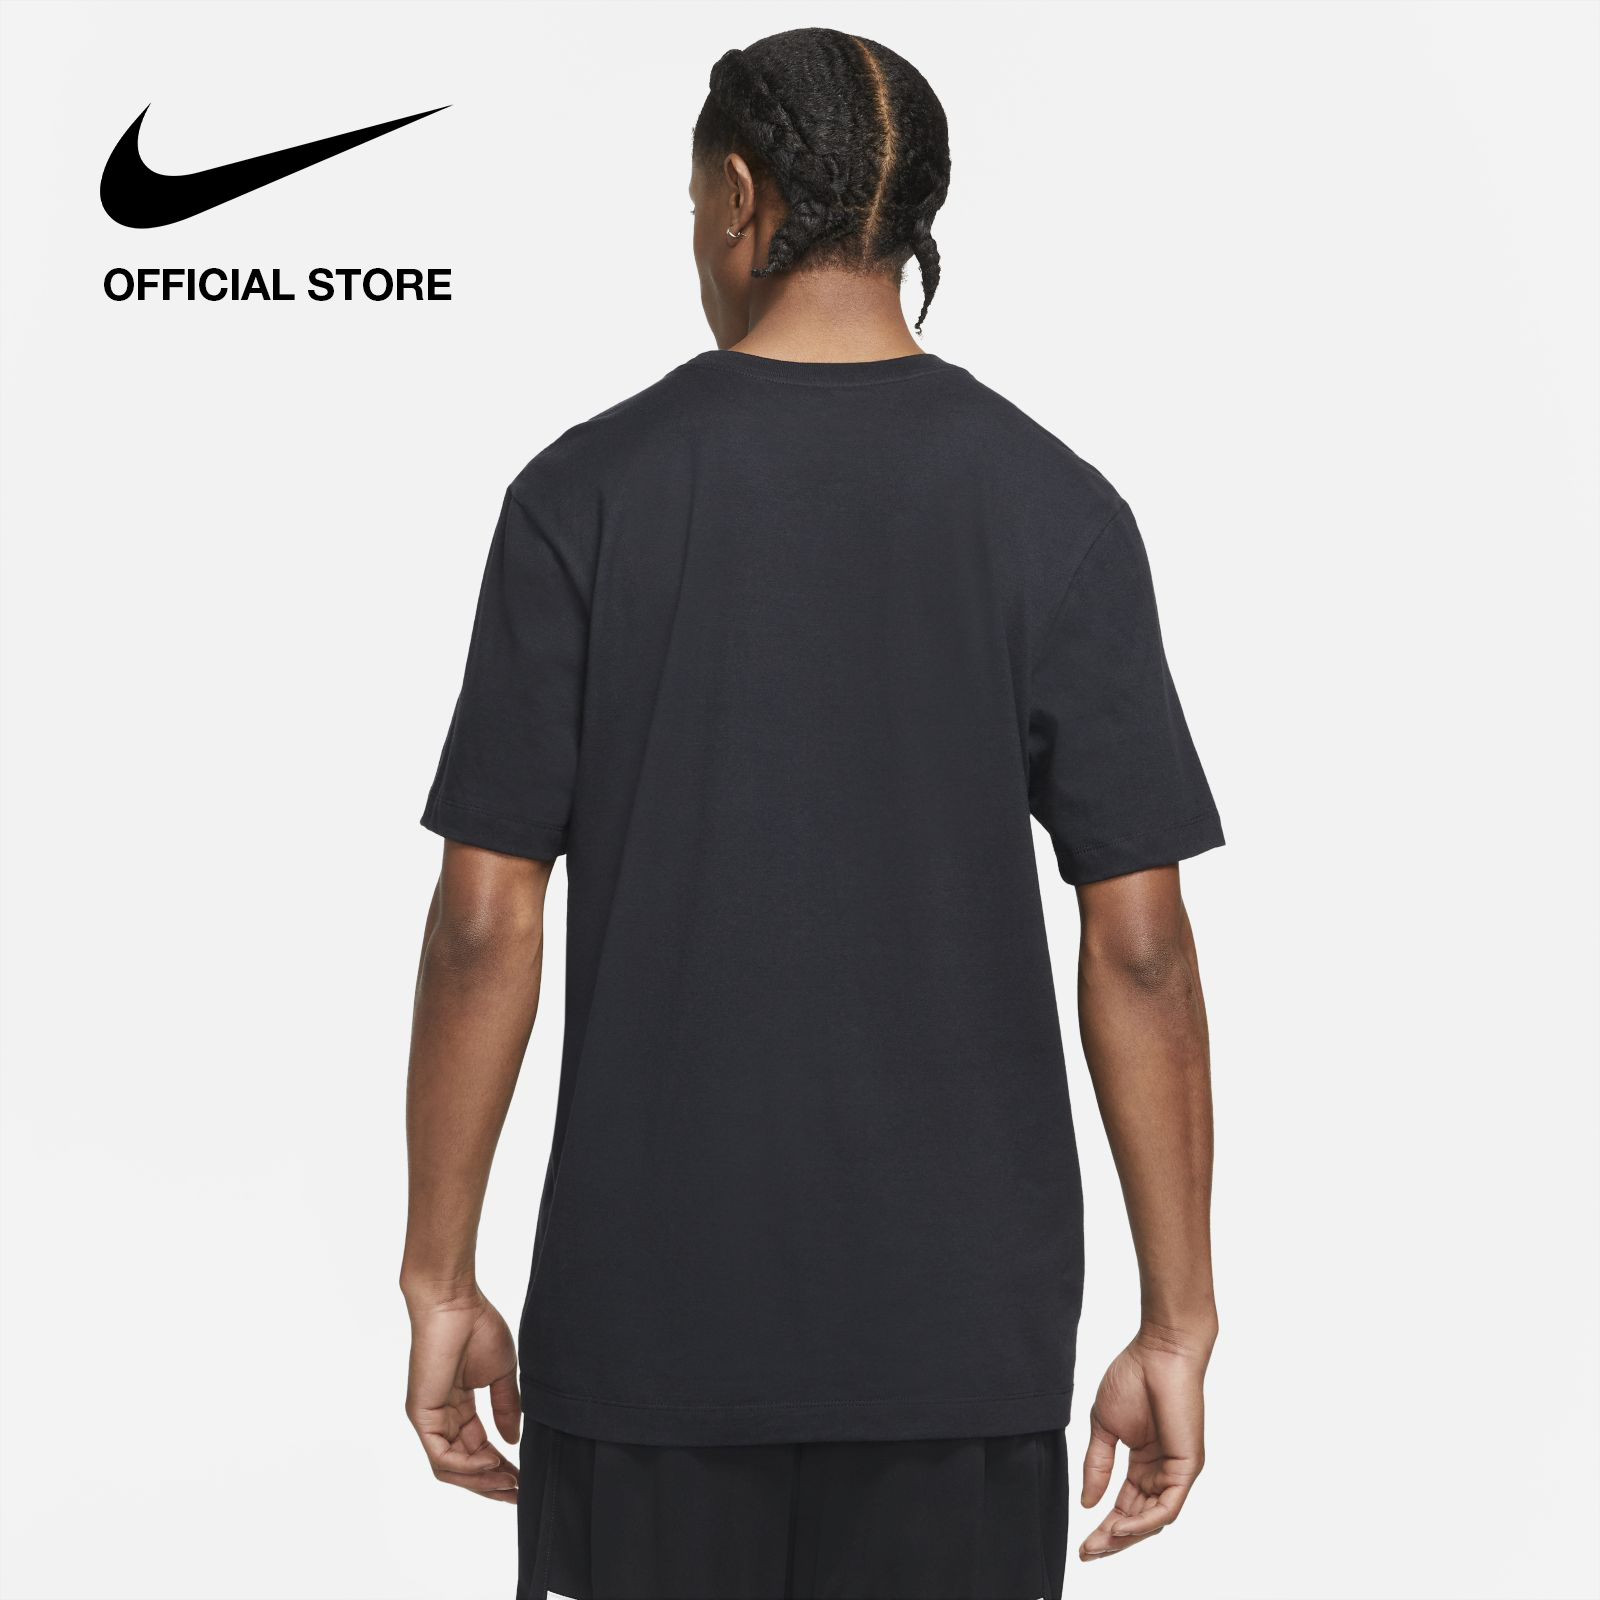 Nike Men's Swoosh T-Shirt - Black เสื้อยืดผู้ชาย Nike Swoosh - สีดำ